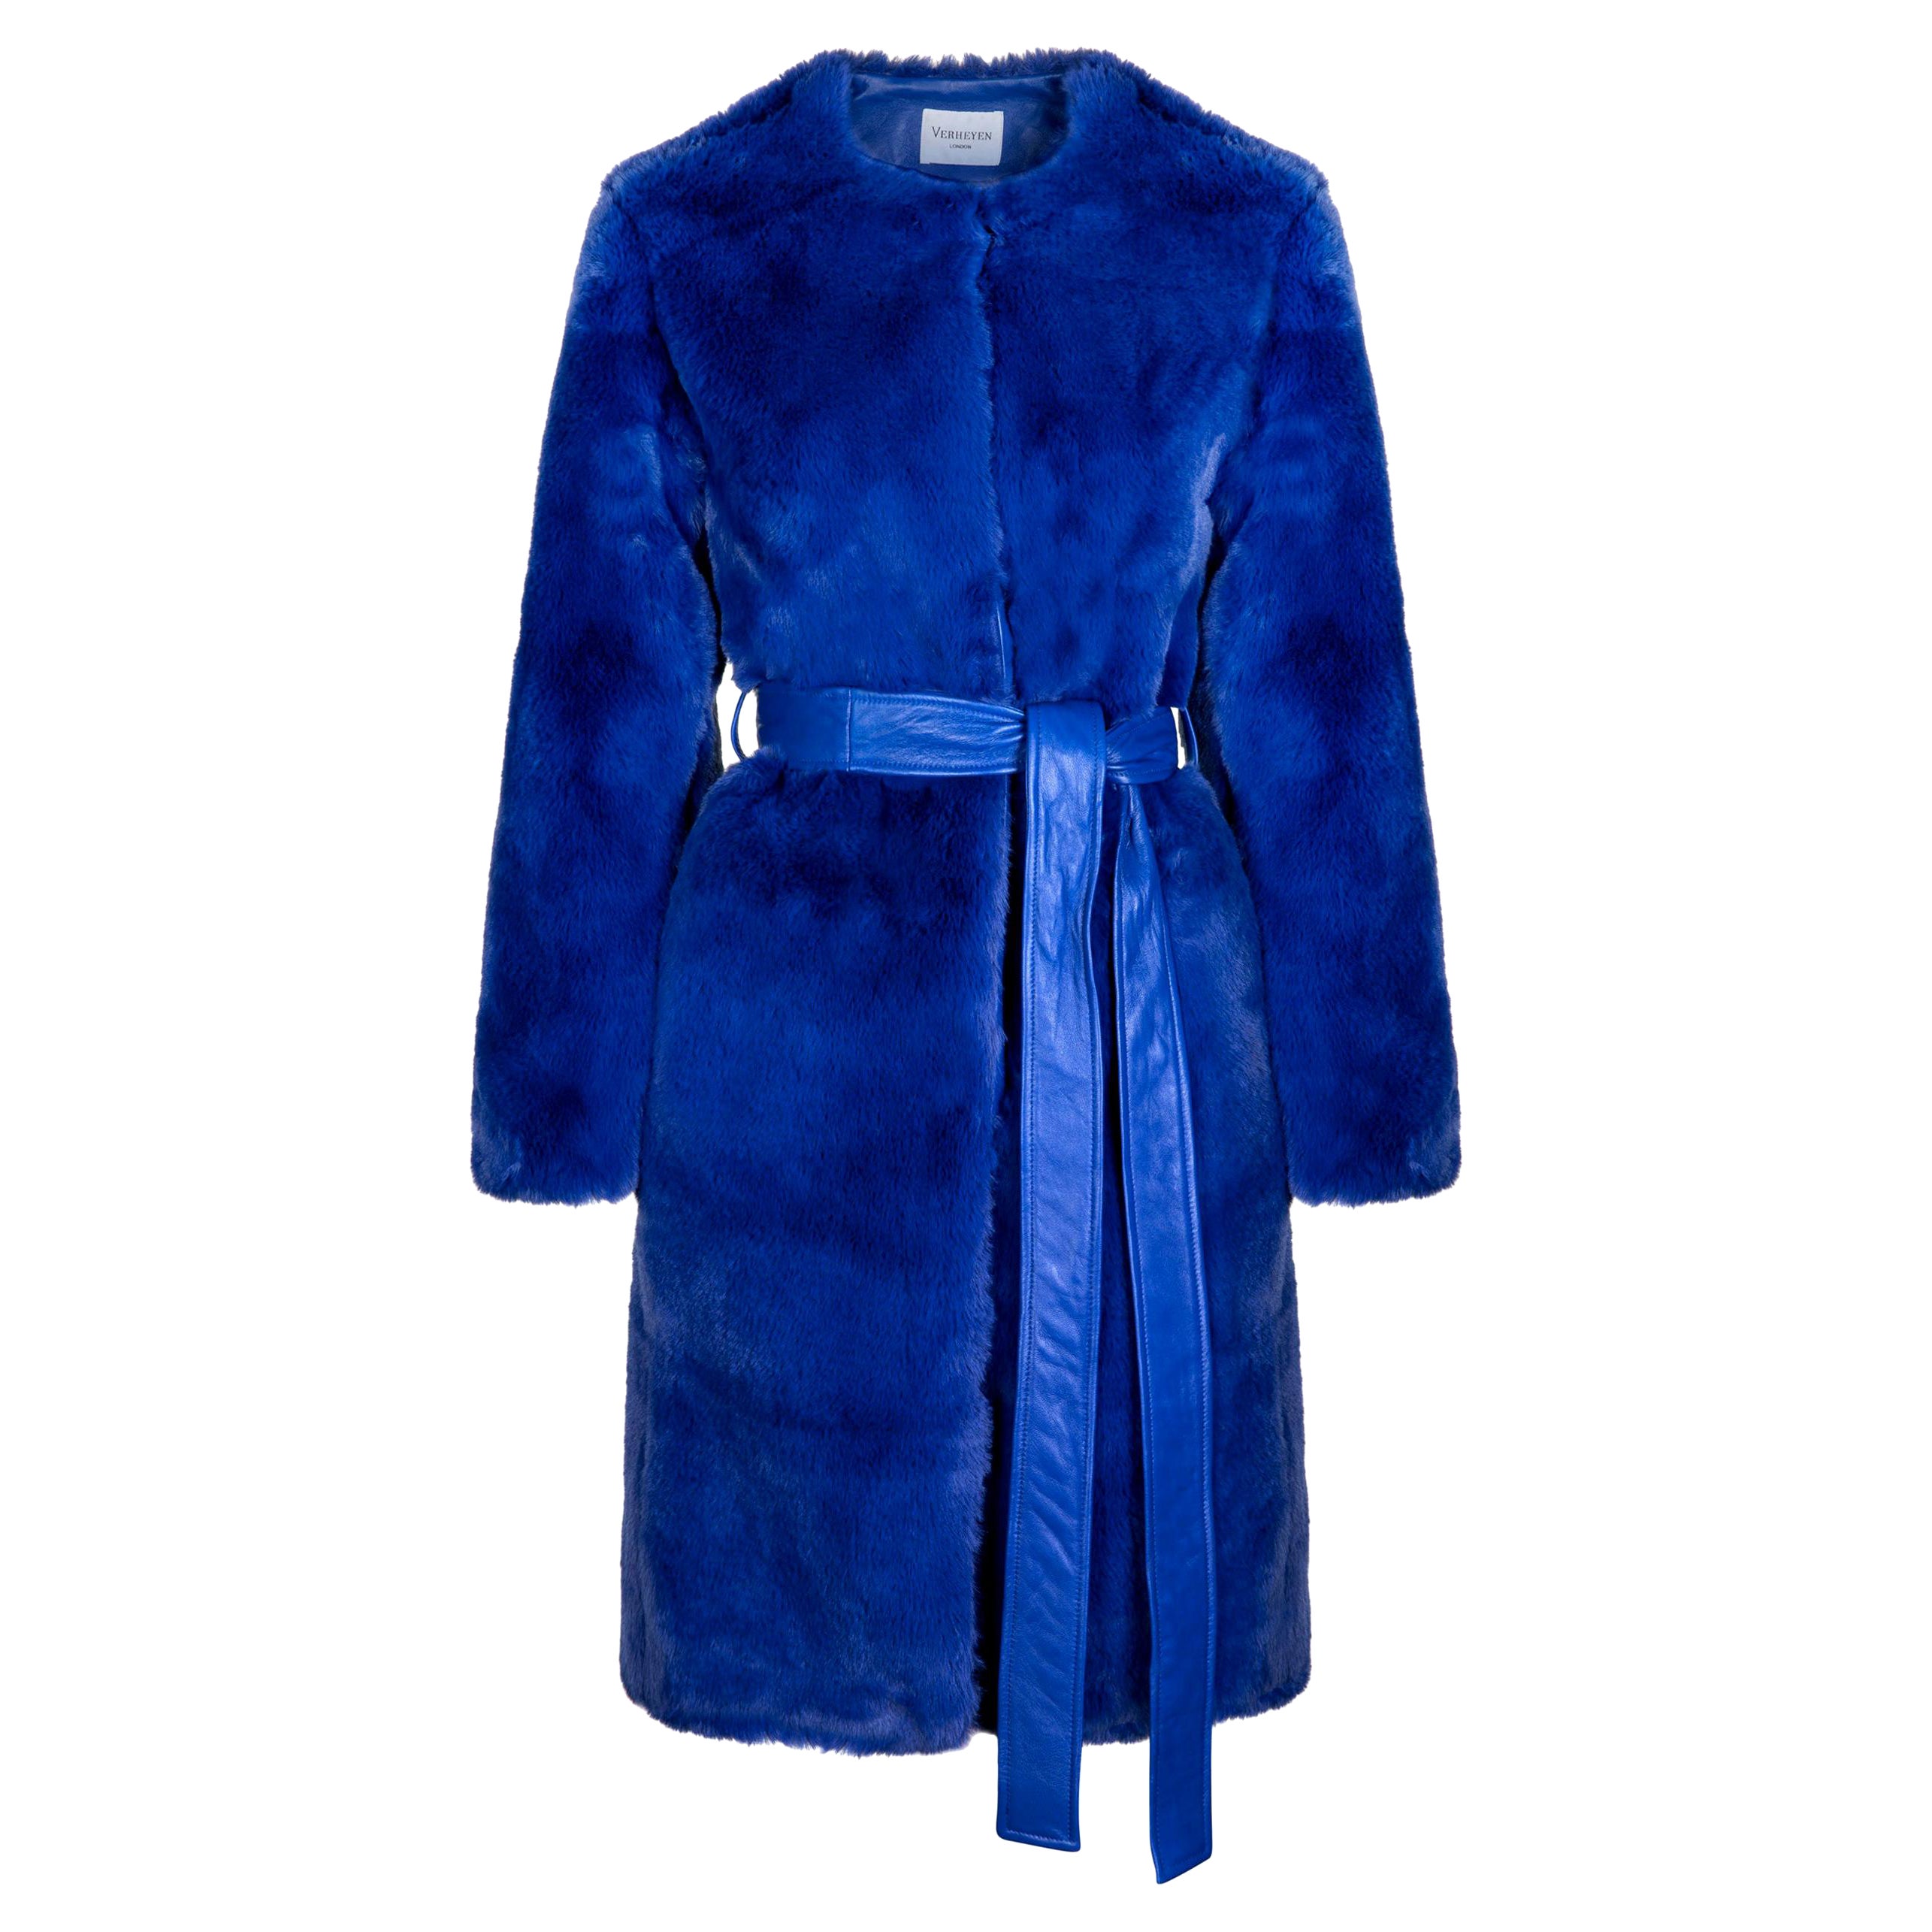 Verheyen London Serena  Collarless Faux Fur Coat in Blue - Size uk 6  For Sale